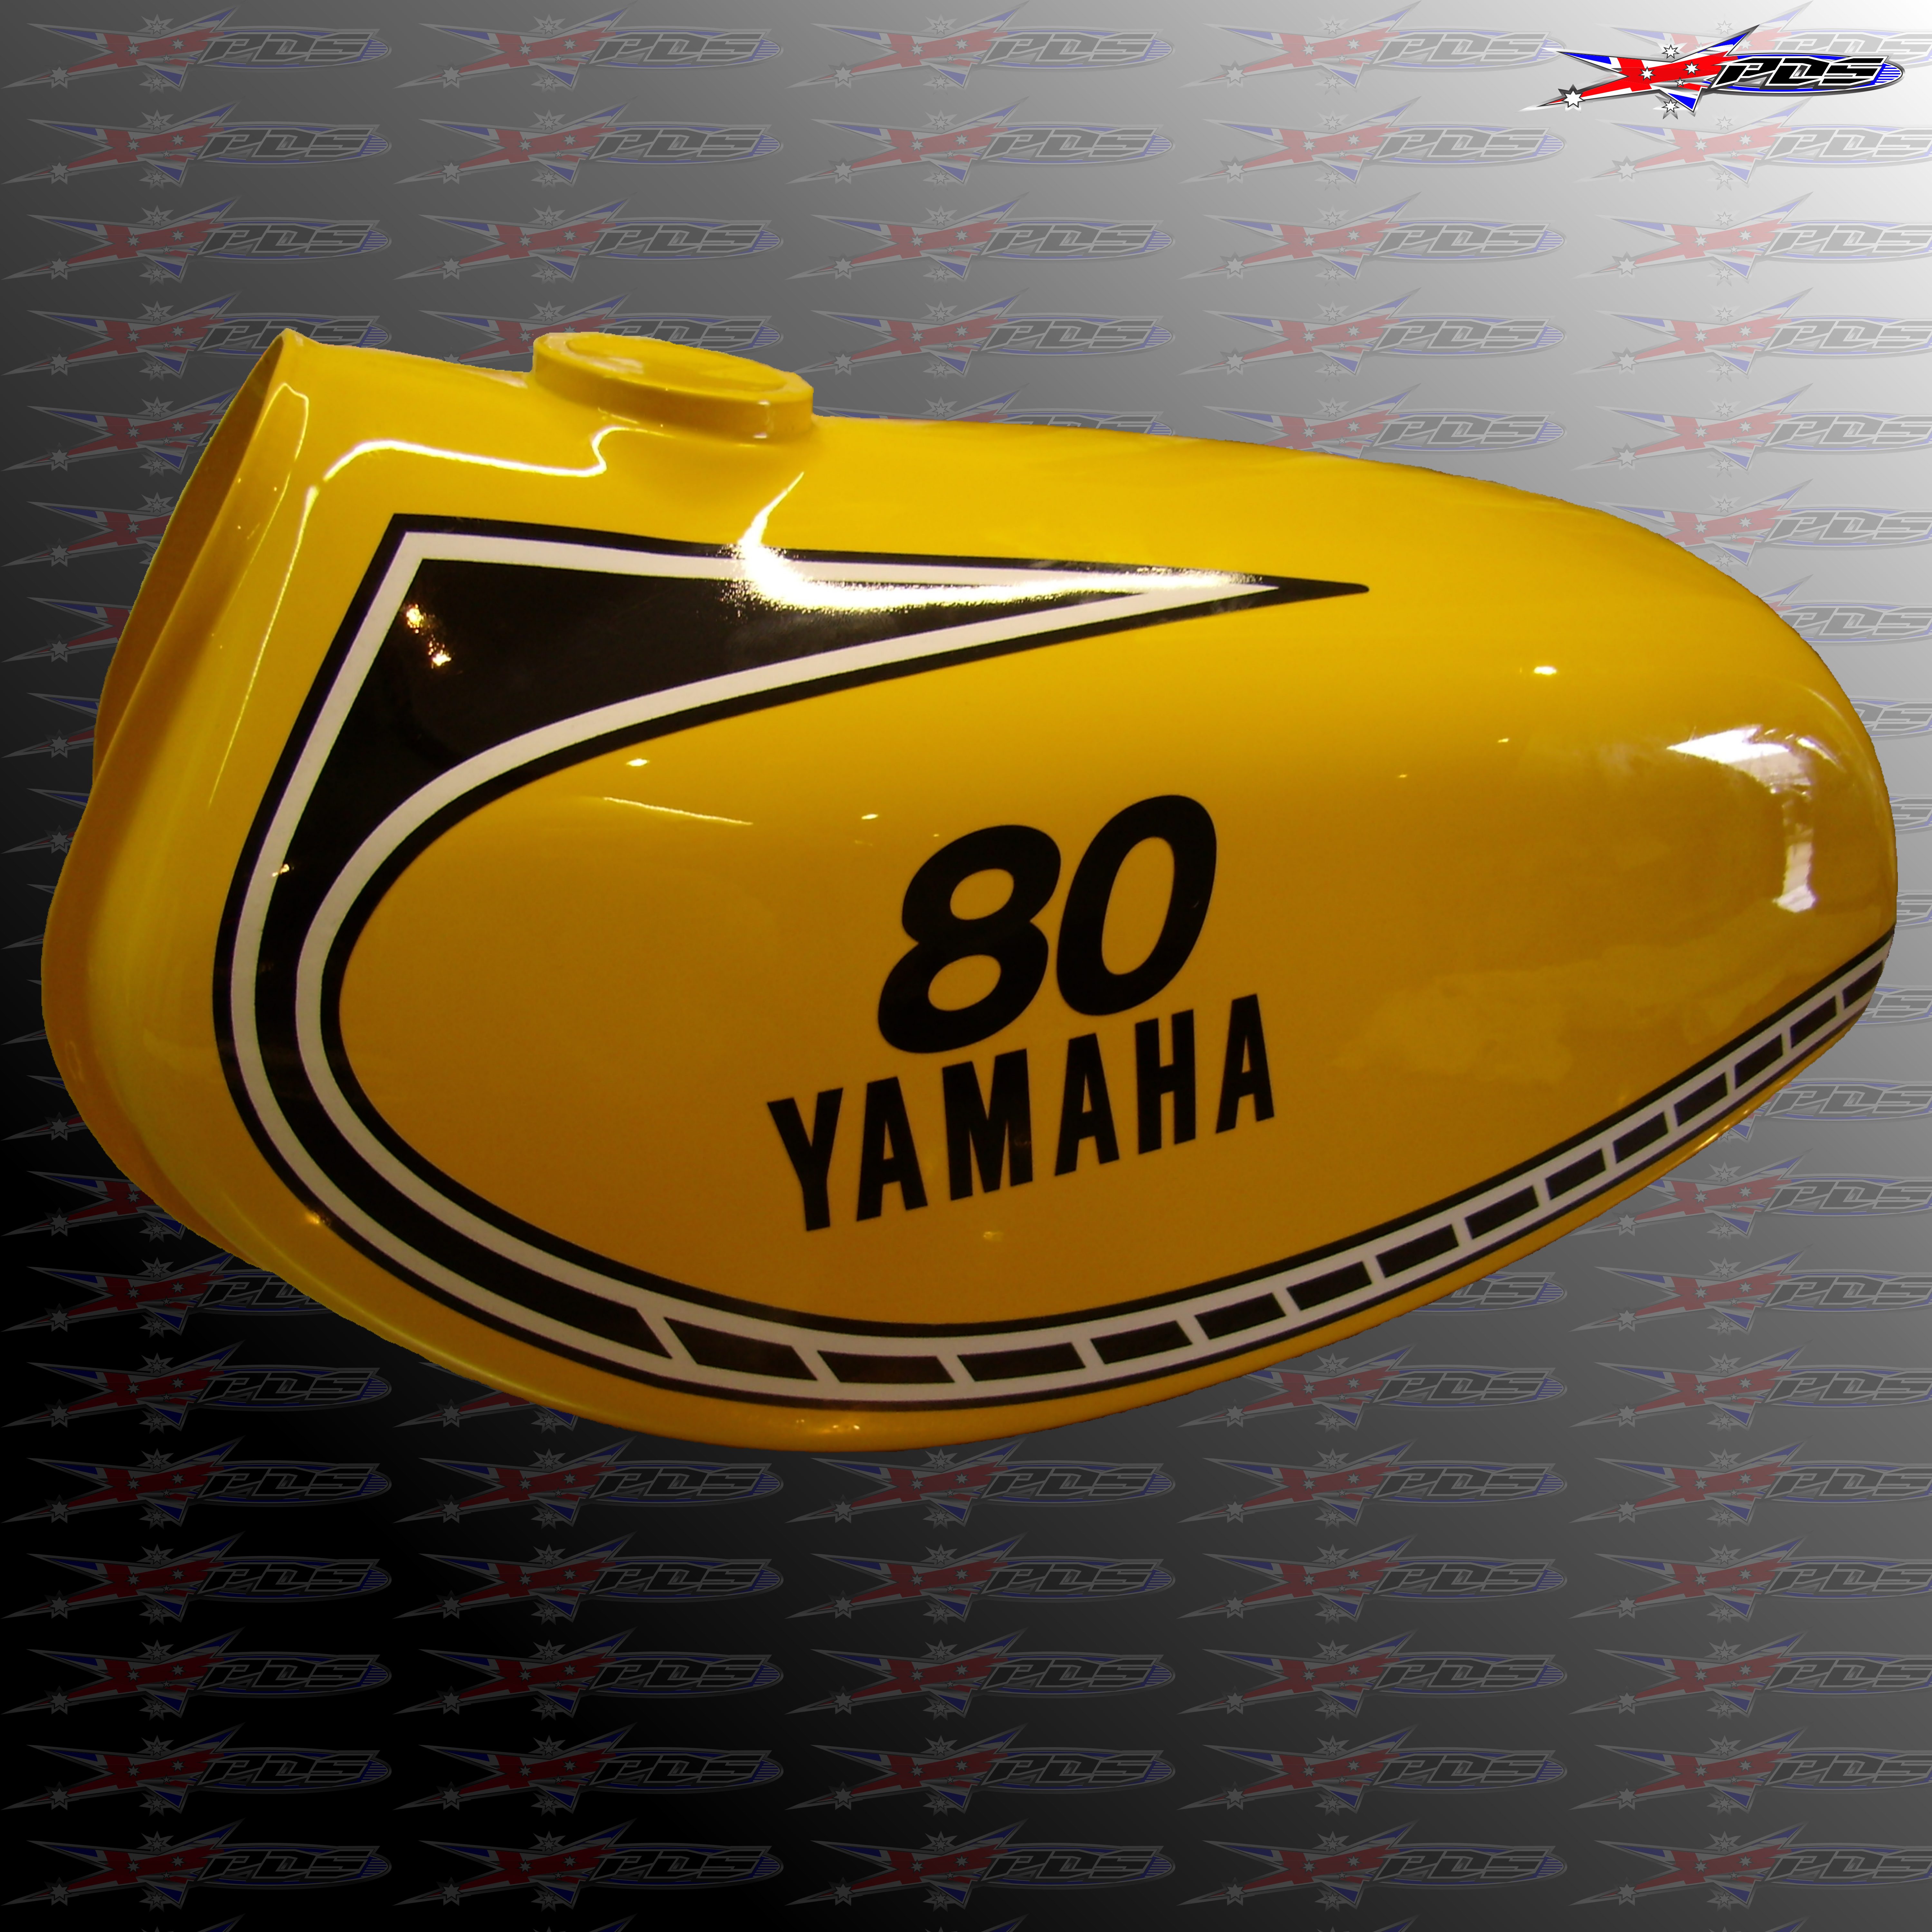 yamaha gas tank logo